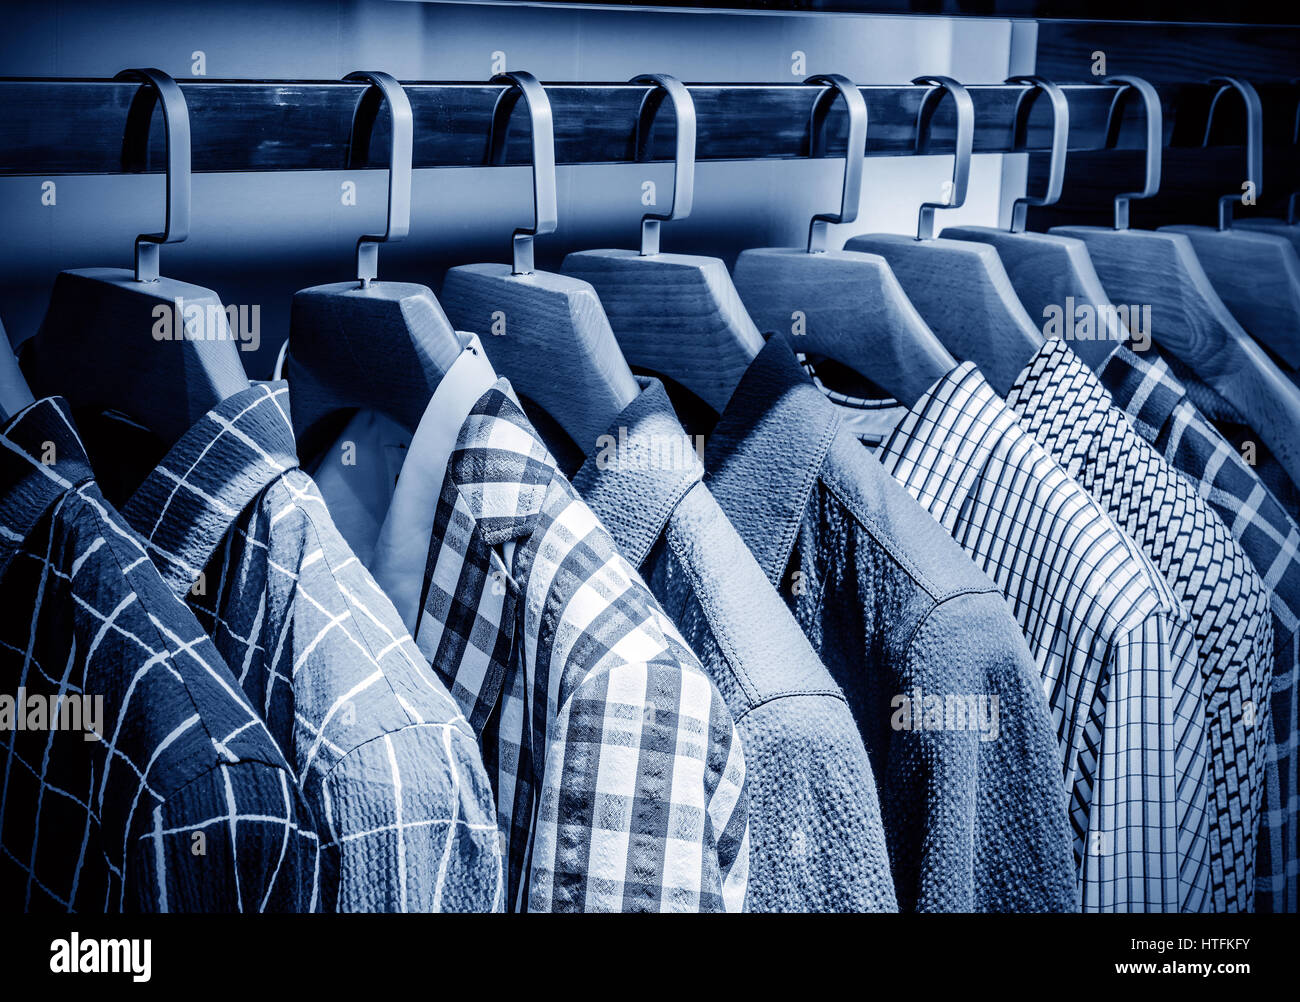 https://c8.alamy.com/comp/HTFKFY/mens-plaid-shirts-on-hangers-in-a-retail-store-HTFKFY.jpg